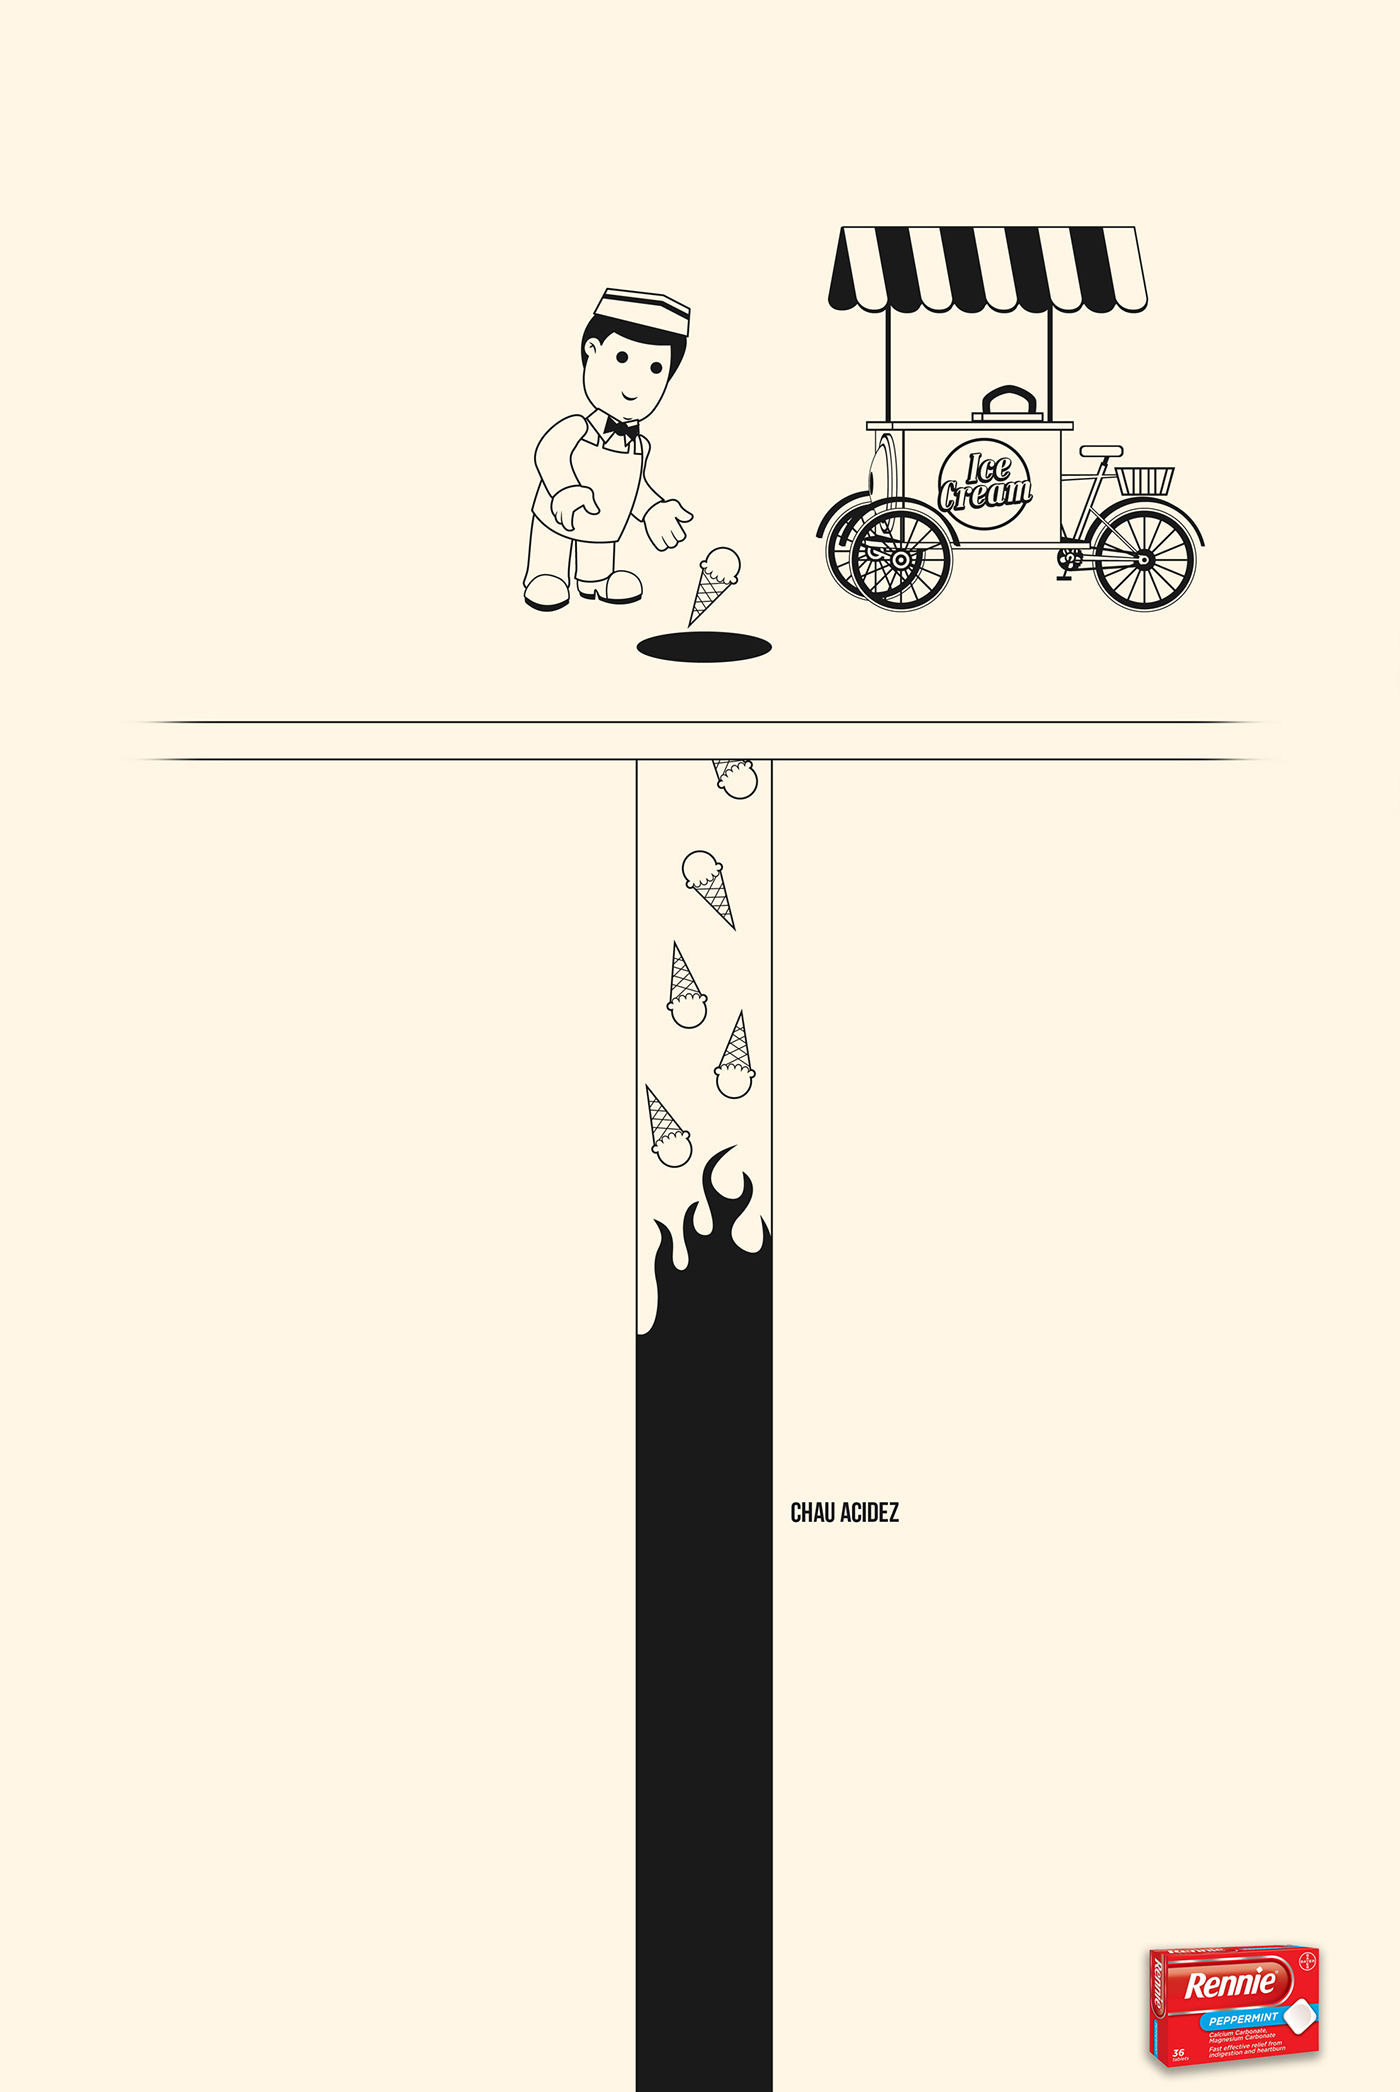 Rennie chau ACIDEZ Bombero superheroe heladero fireman ice cream ilustracion